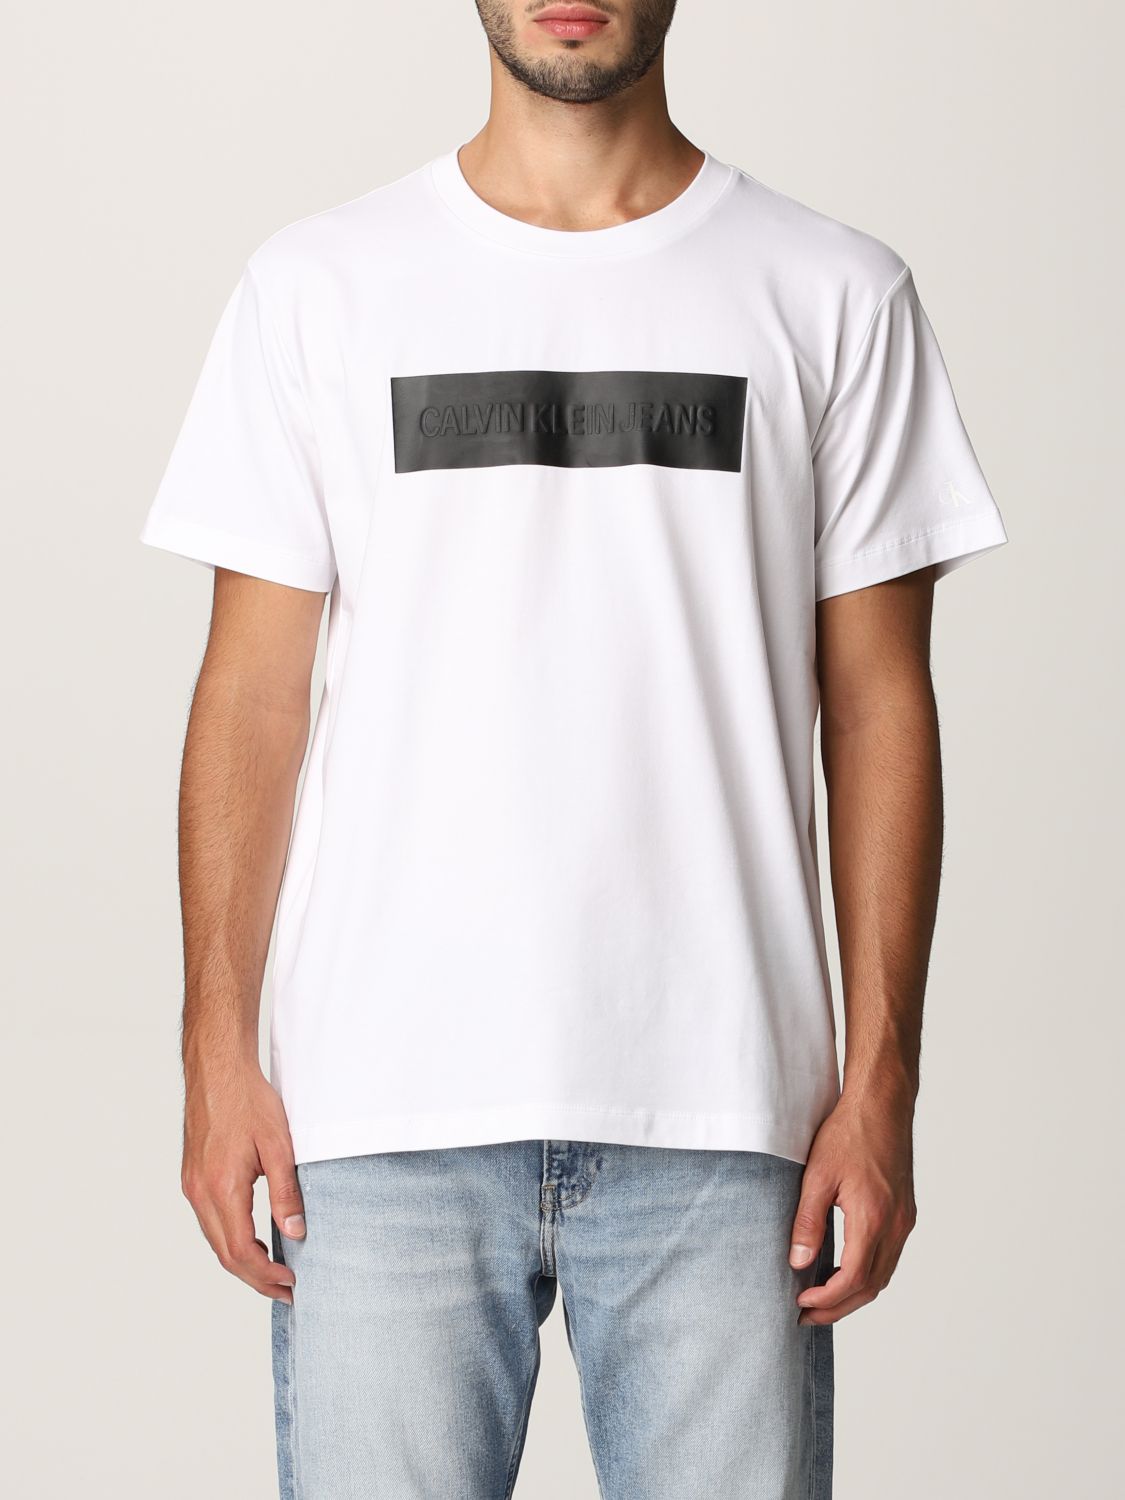 CALVIN KLEIN JEANS: t-shirt for man - White | Calvin Klein Jeans t-shirt  J30J318453 online at